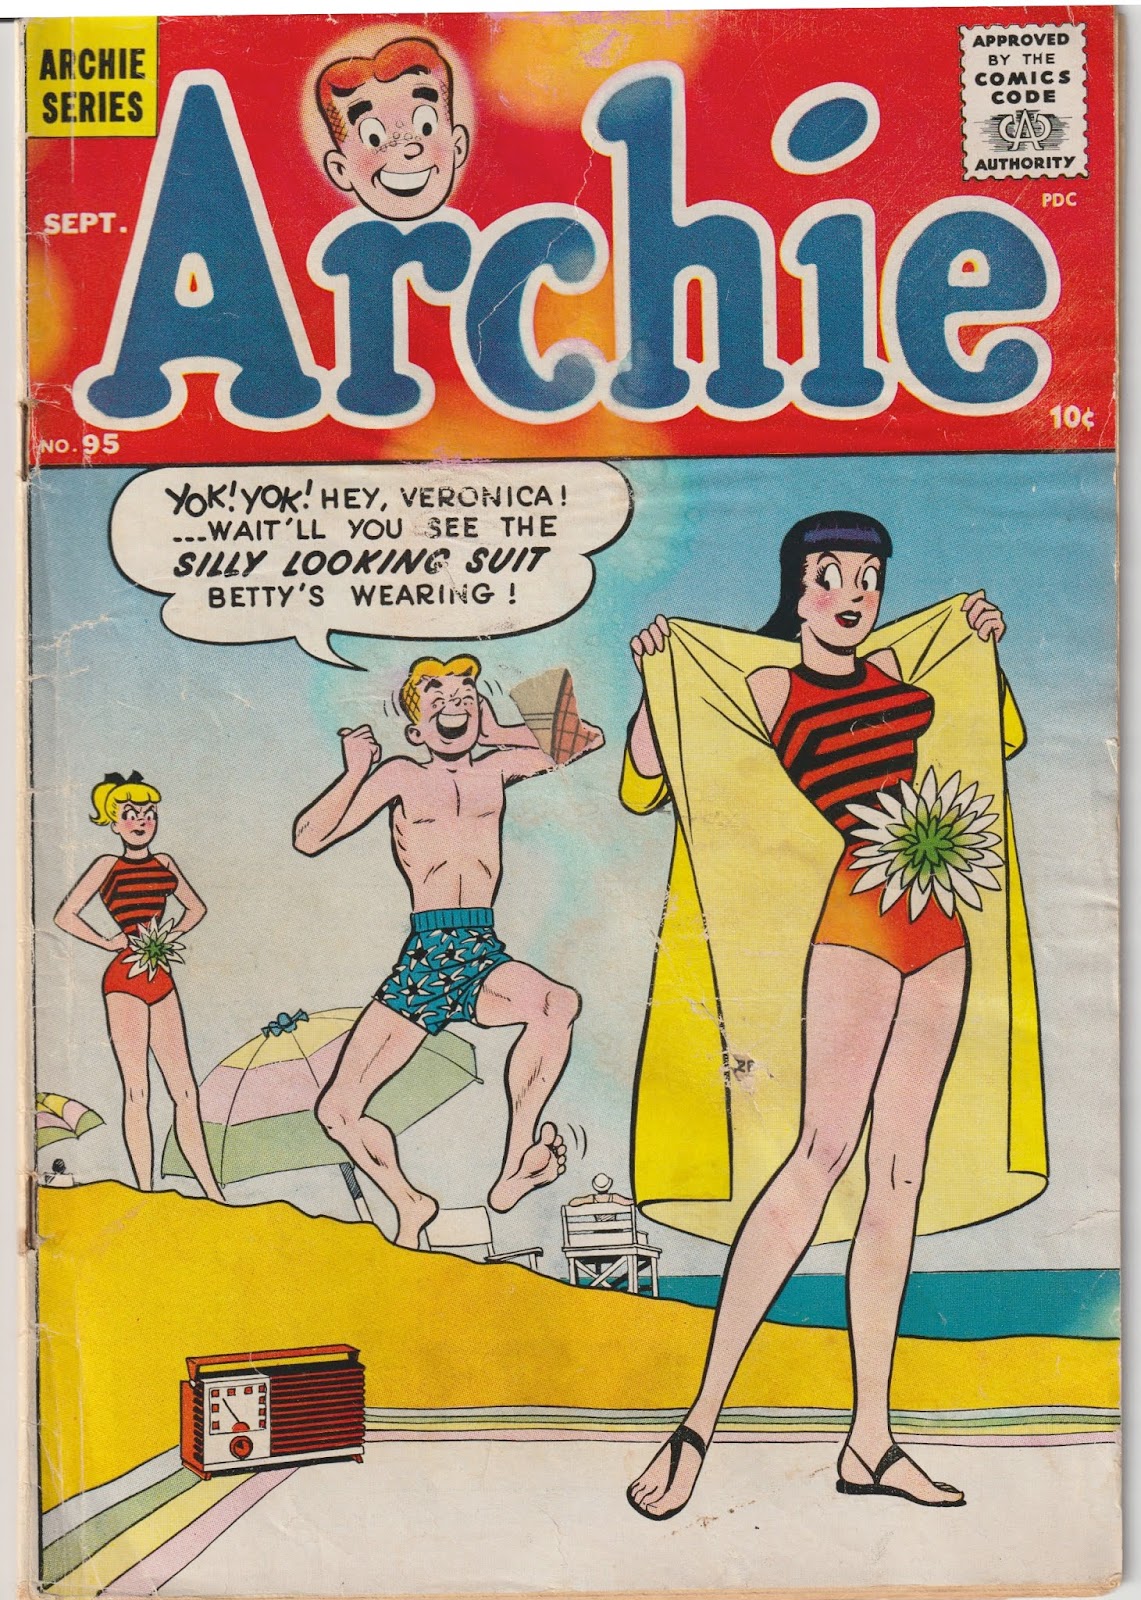 Archie Comics Classic Artists Of The Era Chuck S Comics Cgc